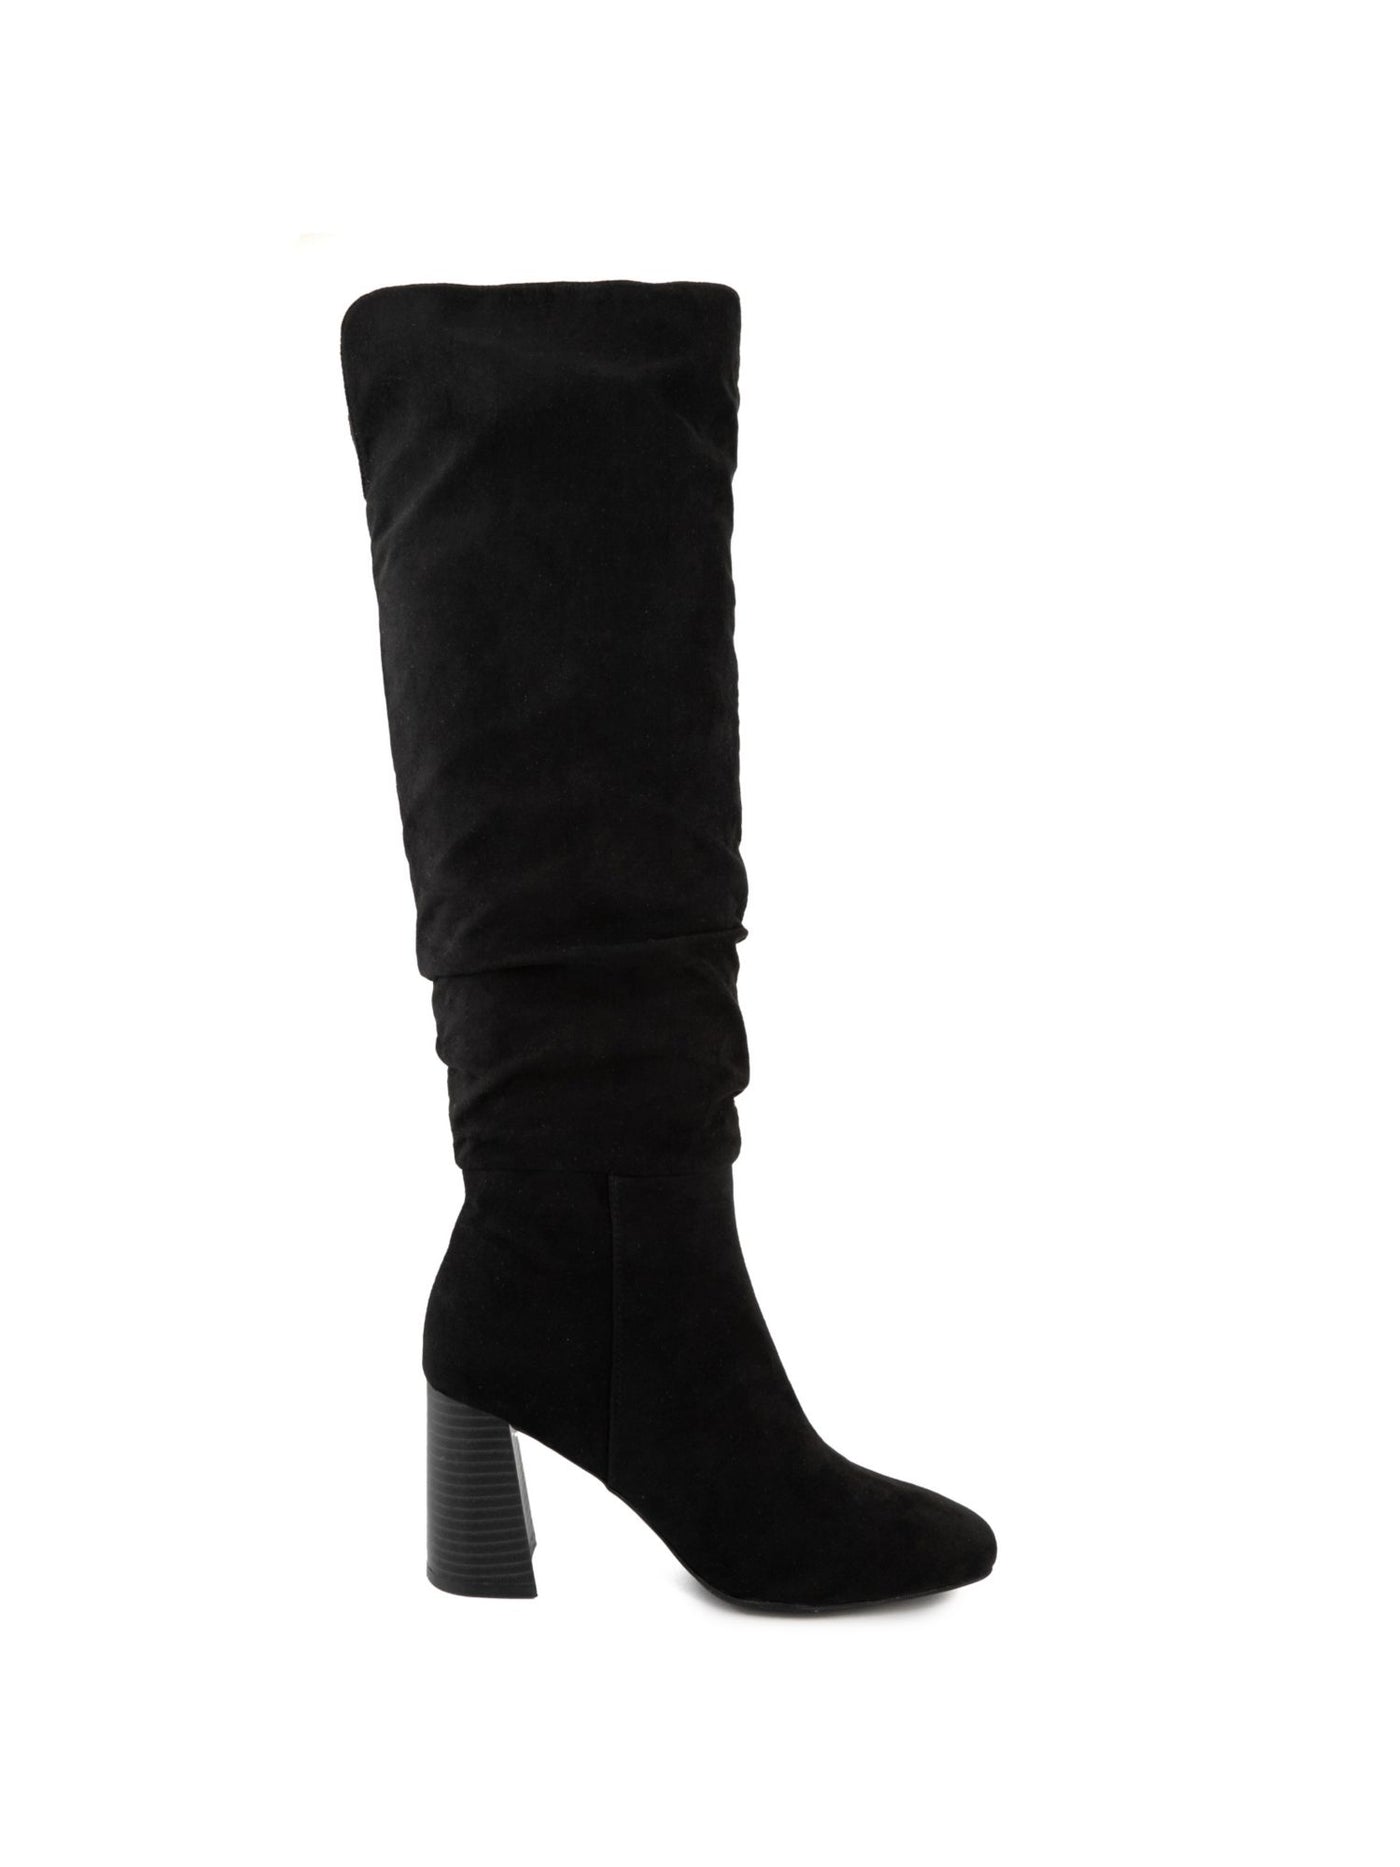 SUGAR Womens Black Comfort Emerson Square Toe Block Heel Zip-Up Slouch Boot 8 M